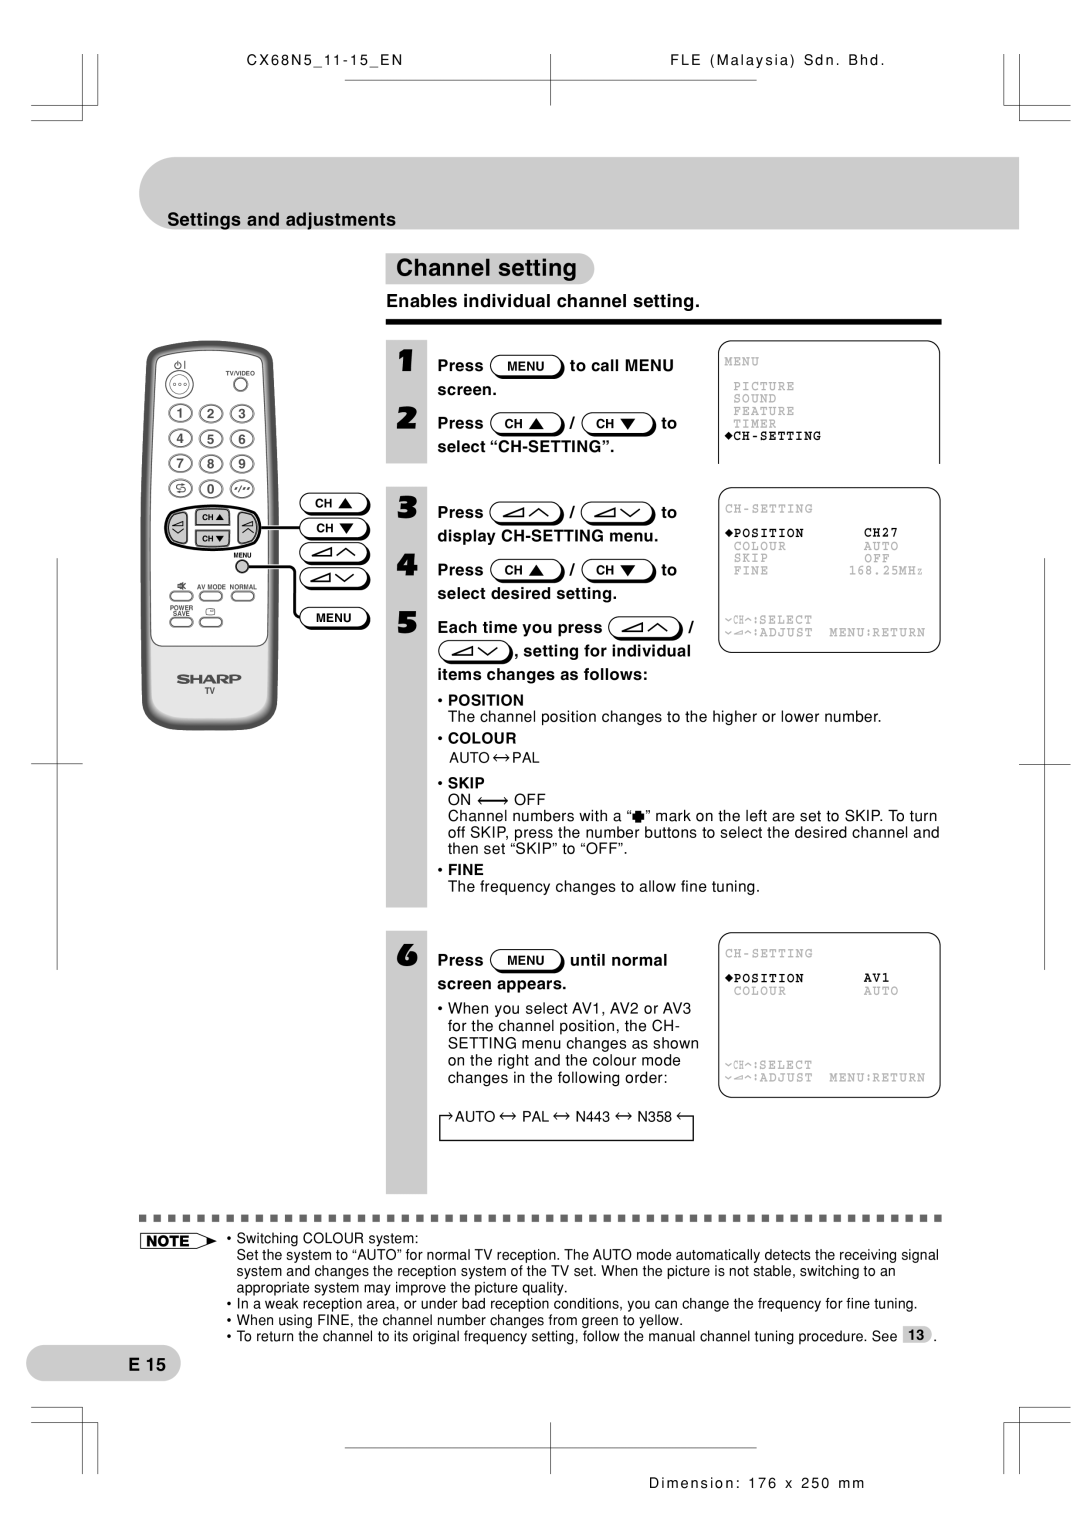 Sharp Cx68n5 Channel setting, Enables individual channel setting, Settings and adjustments, Ch-Setting, POSITION AV1 